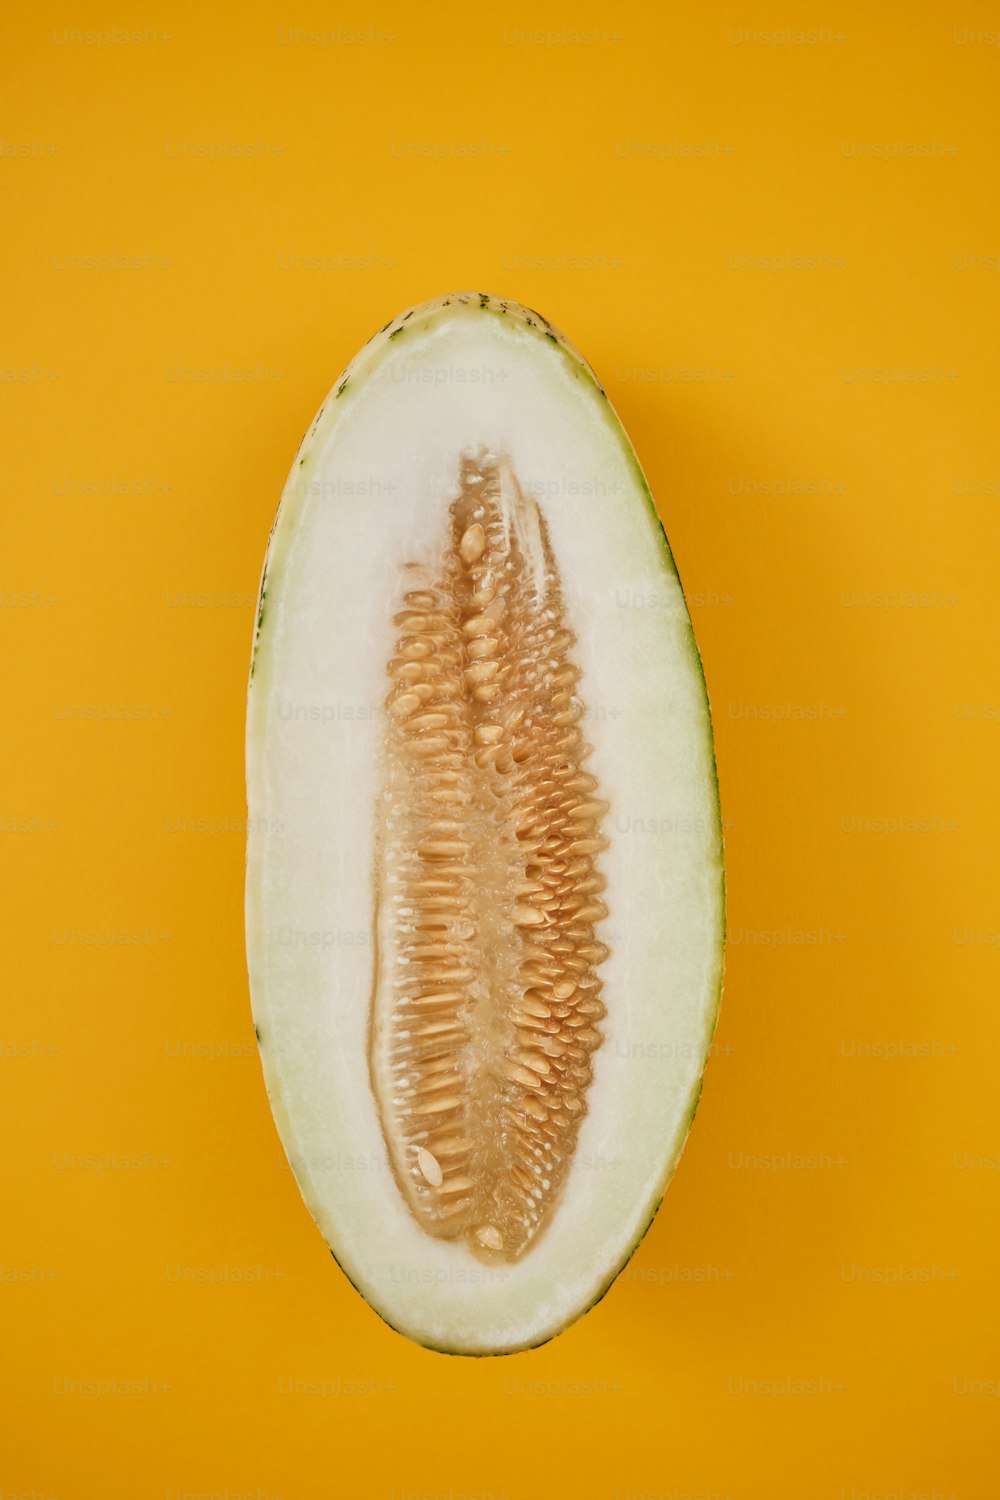 a half eaten melon on a yellow background